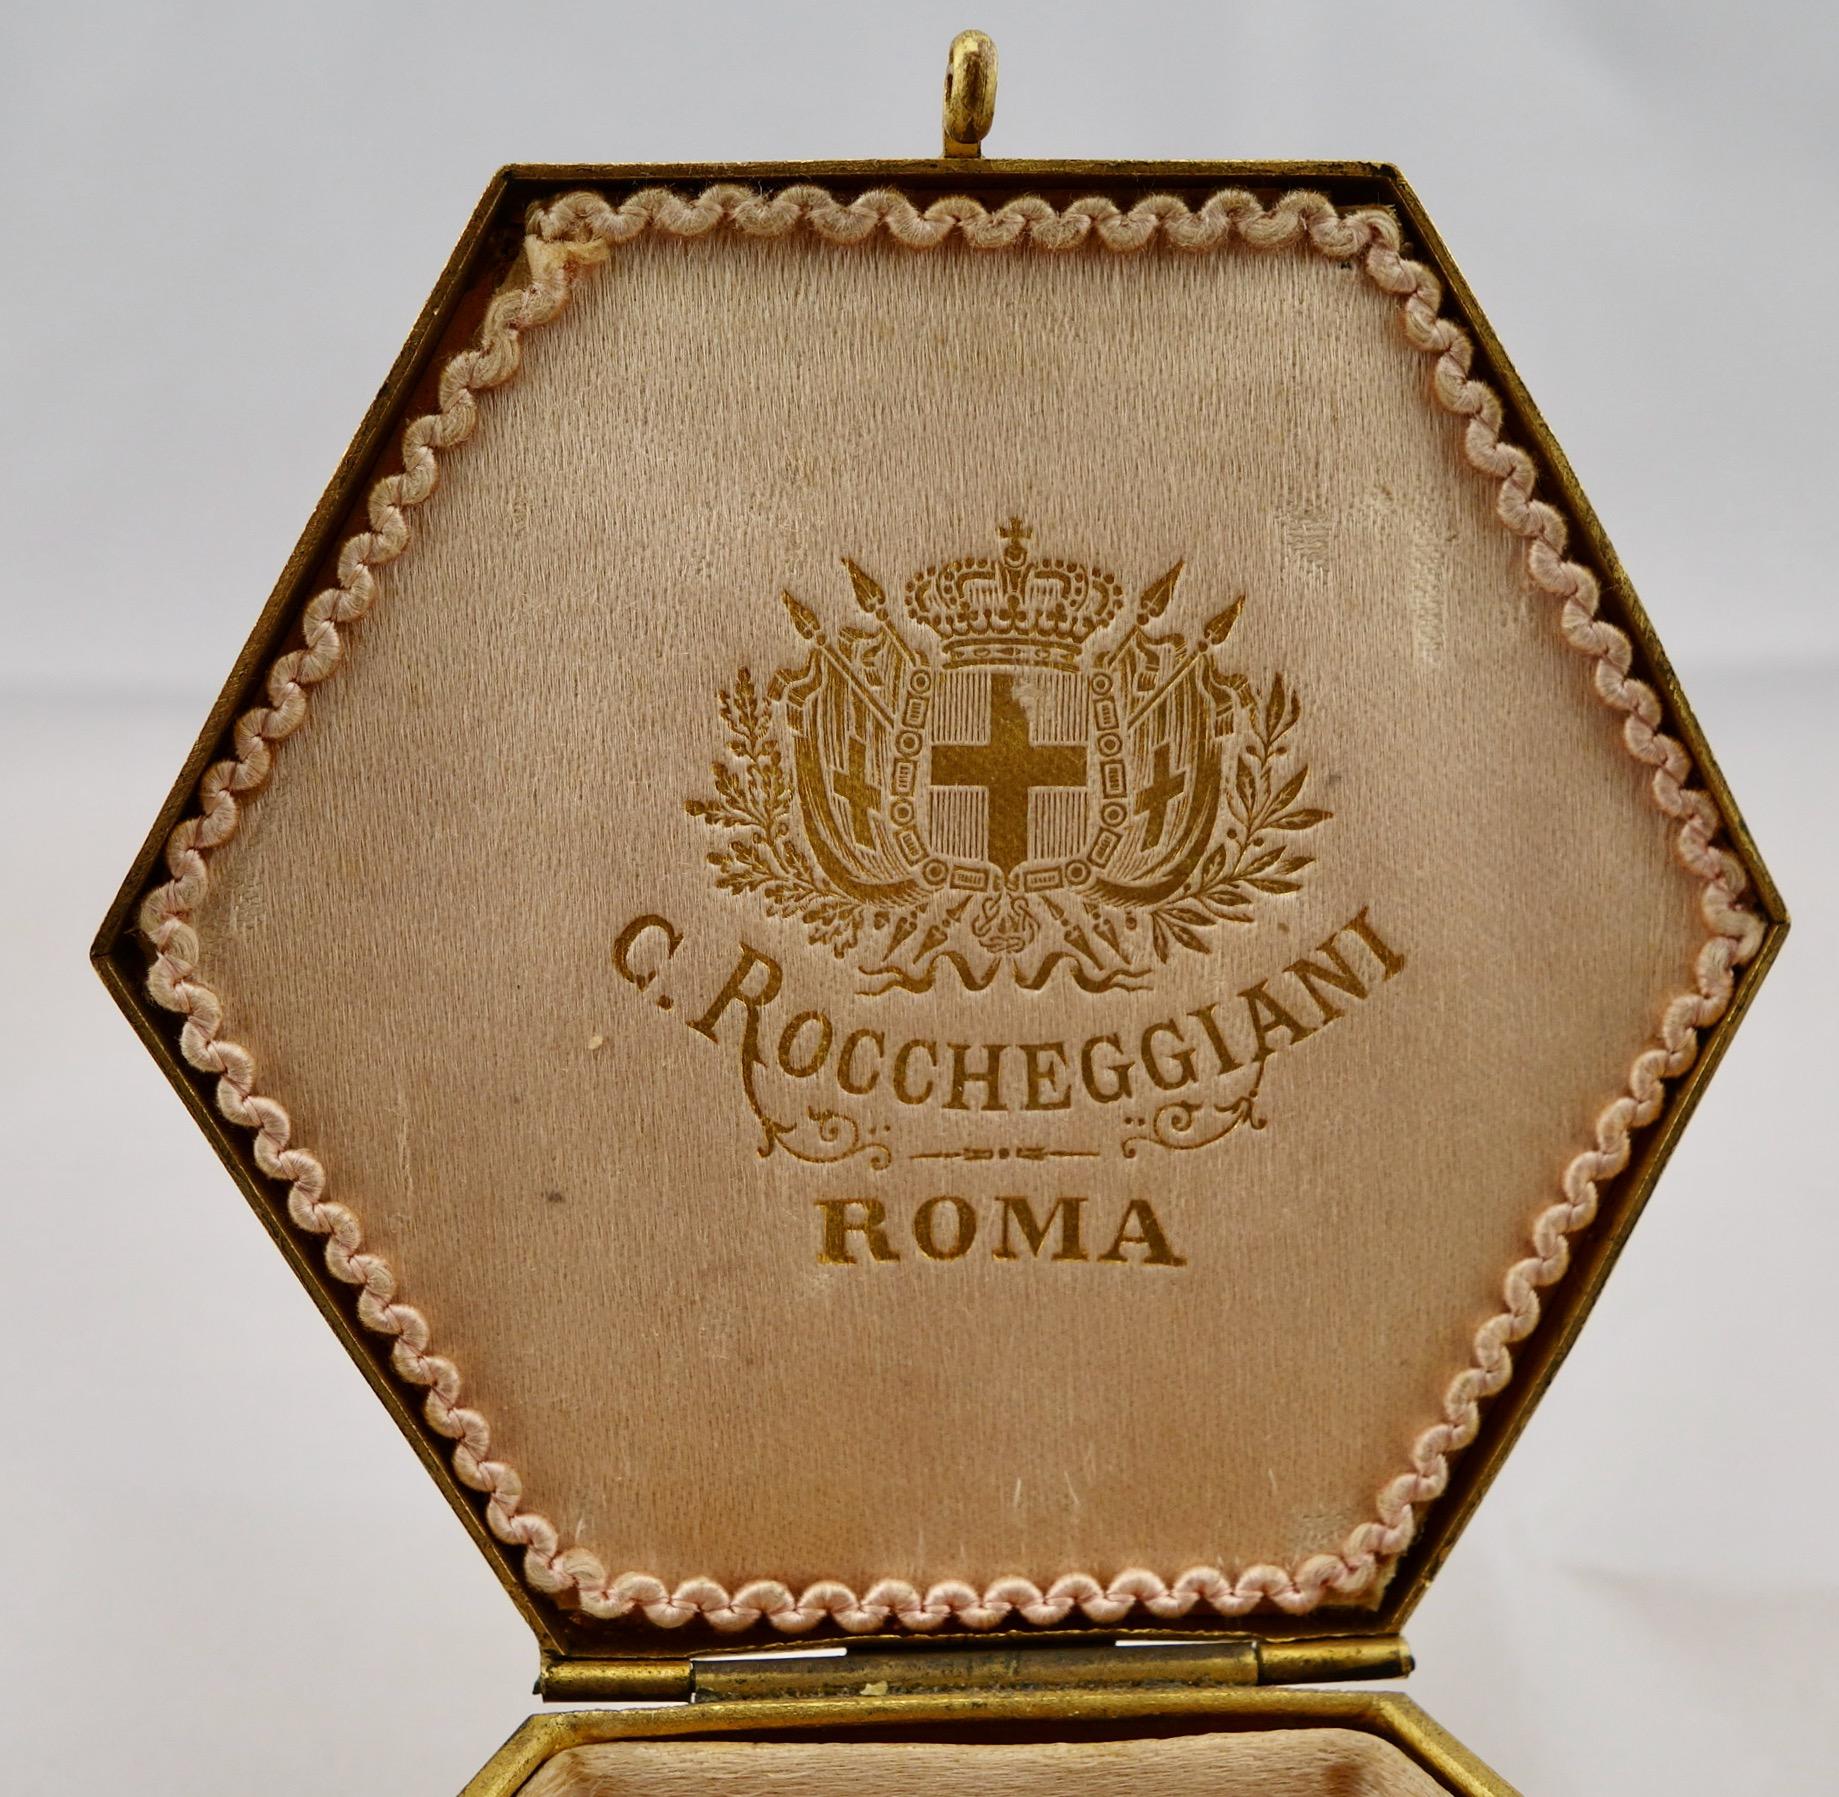 High Victorian Italian Micromosaic Hexagonal Box by Roccheggiani Workshop, Rome, 1880s